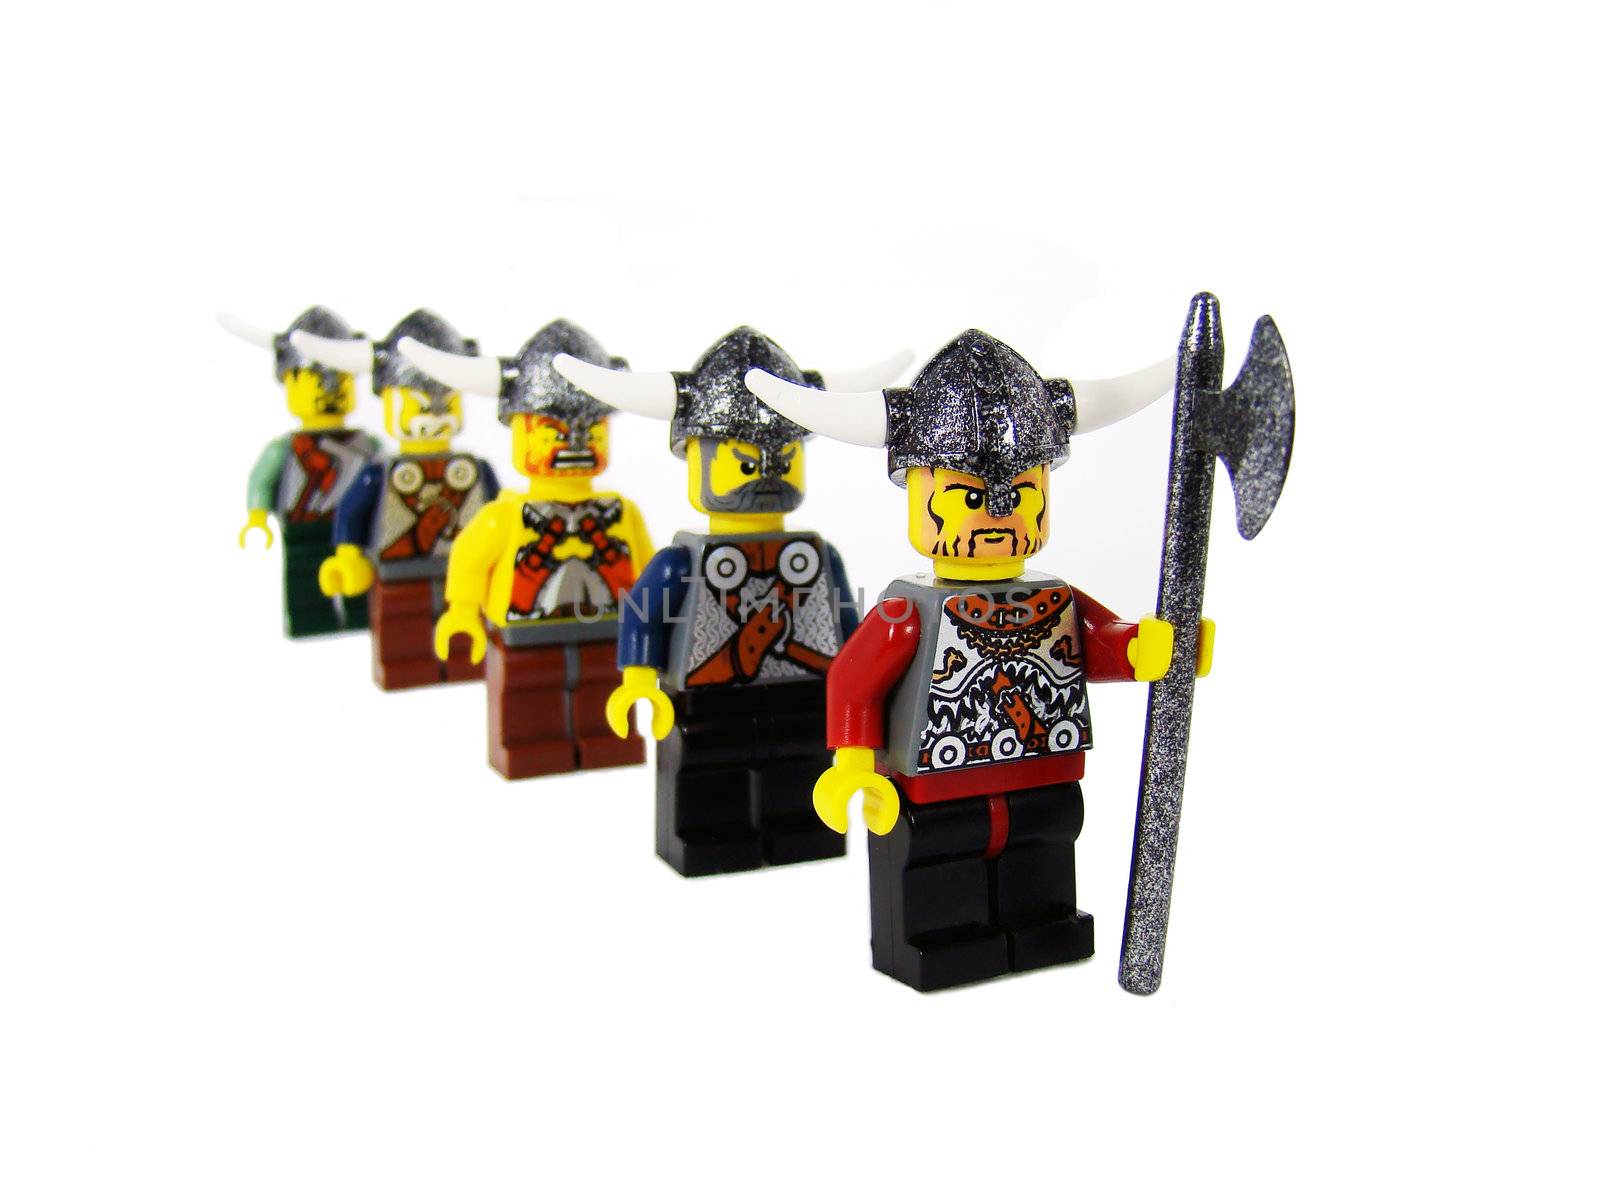 Vikings, warriors, building blocks by FER737NG